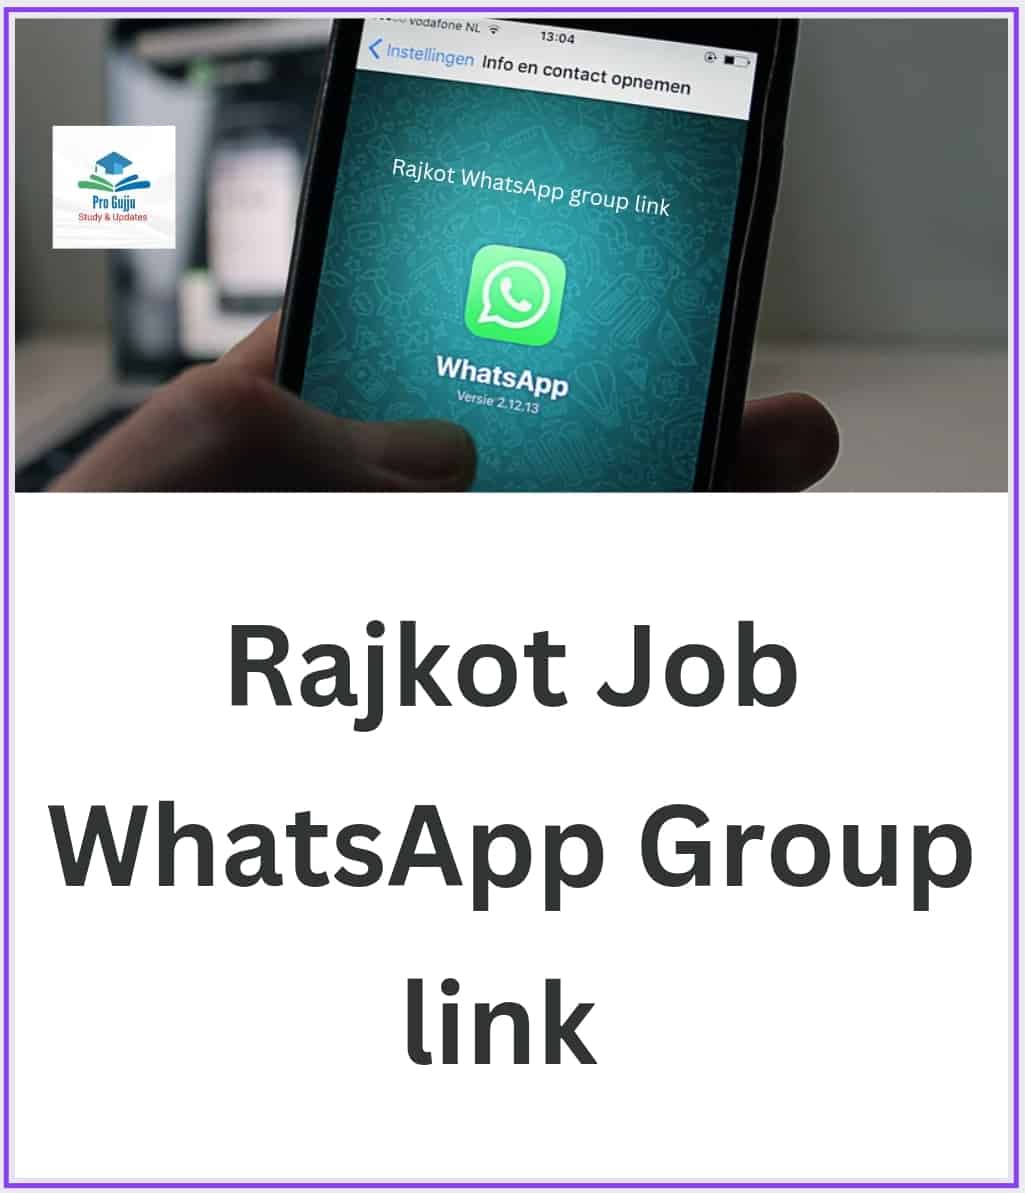 Rajkot Job WhatsApp Group Link